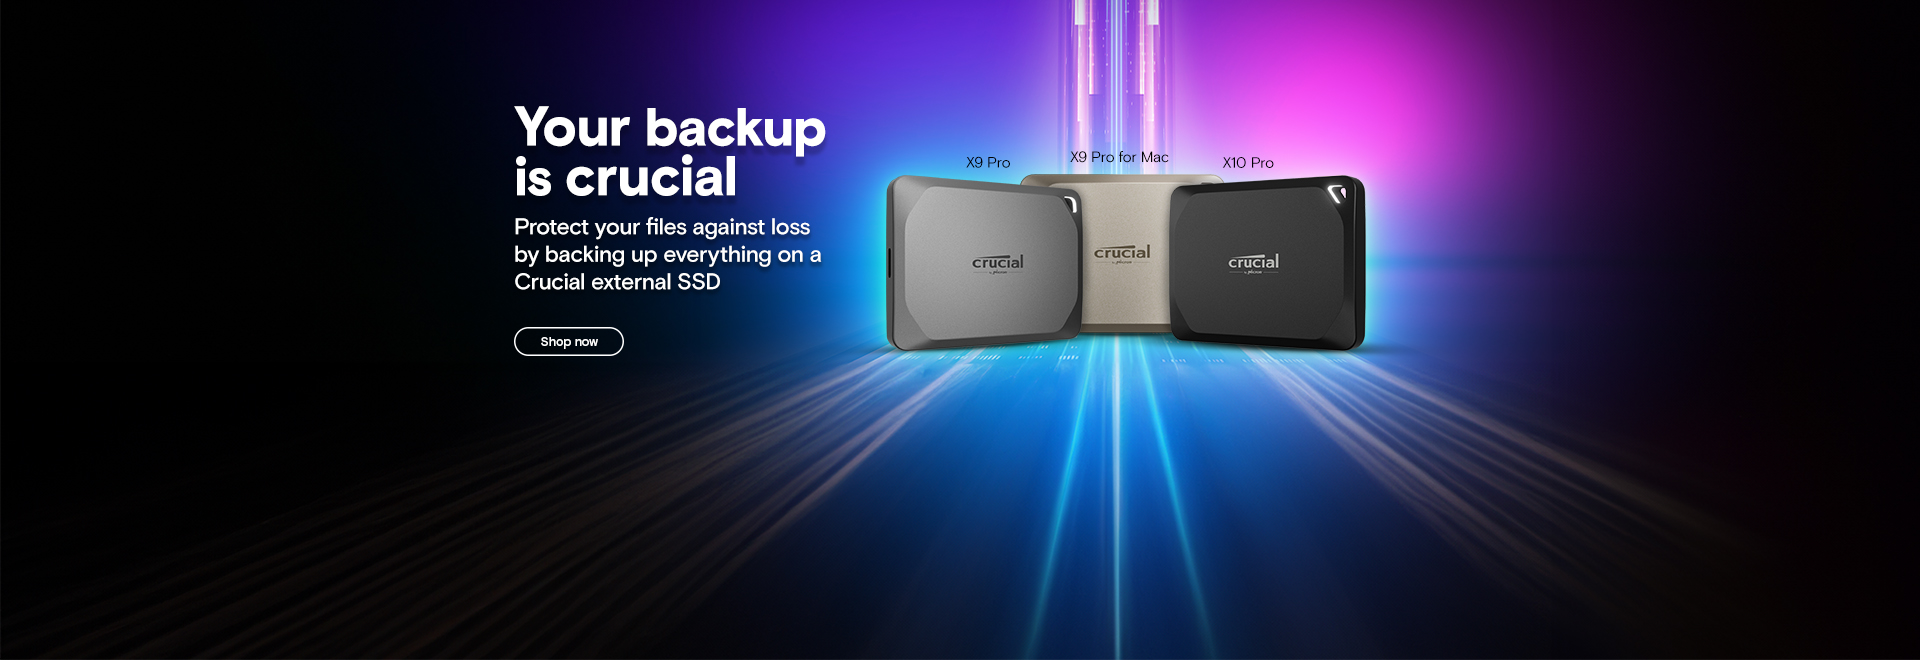 newegg.com - Portable SSD backup by Crucial